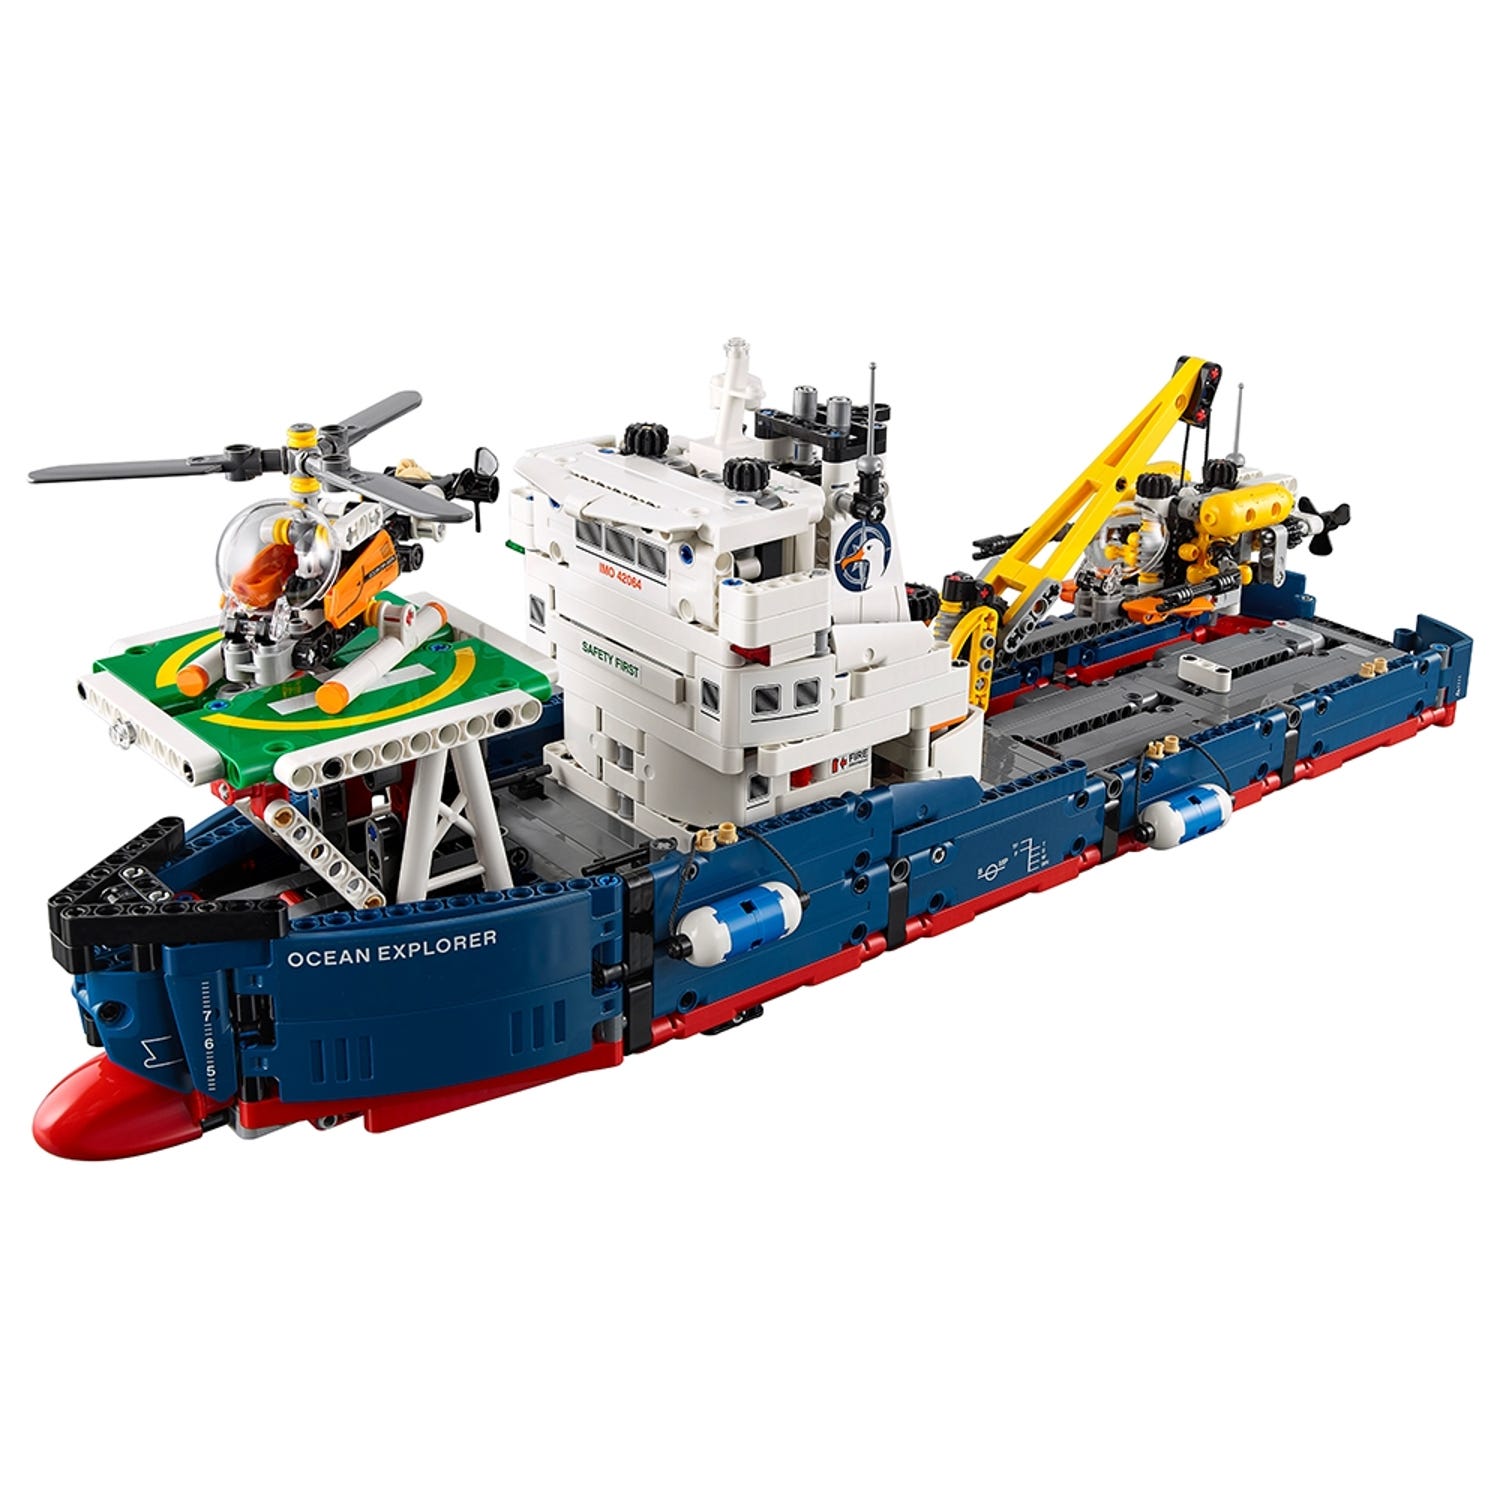 Ocean Explorer 42064 | | Buy online at the Official LEGO® Shop US